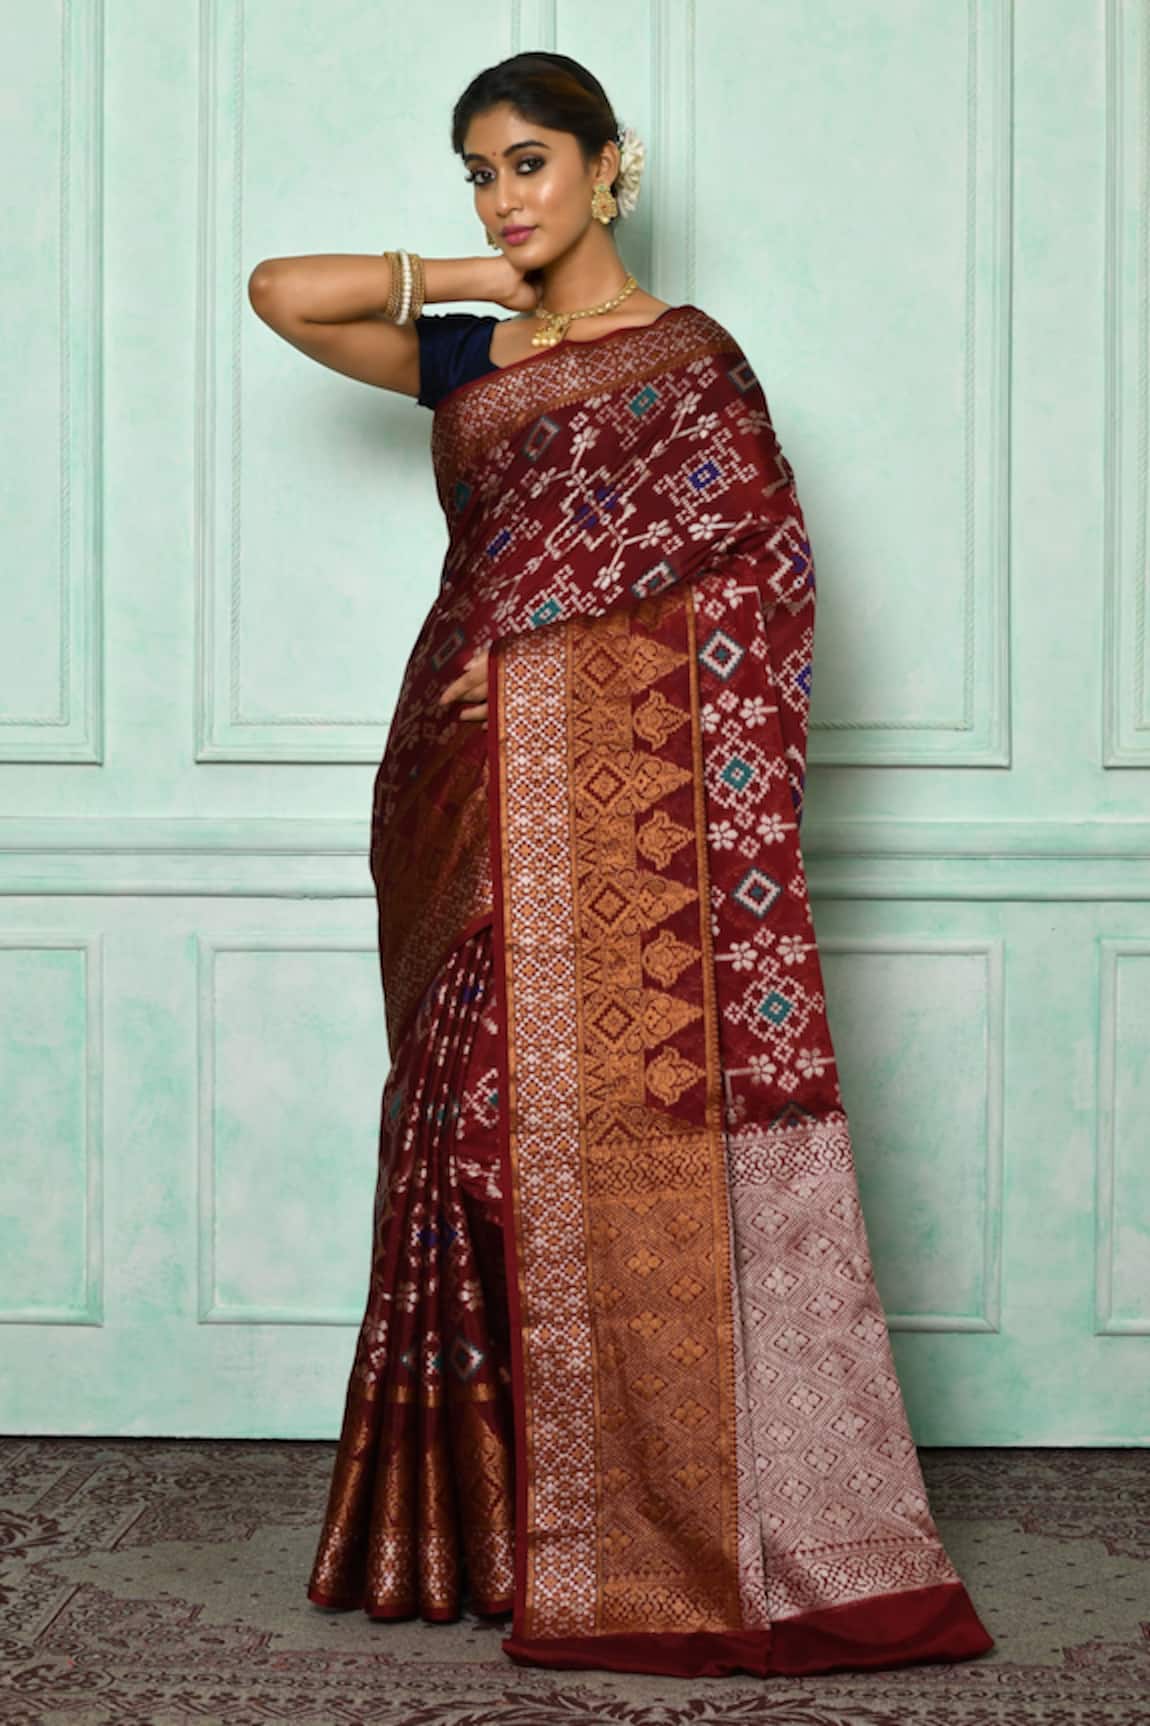 Aryavir Malhotra Banarasi Silk Woven Saree